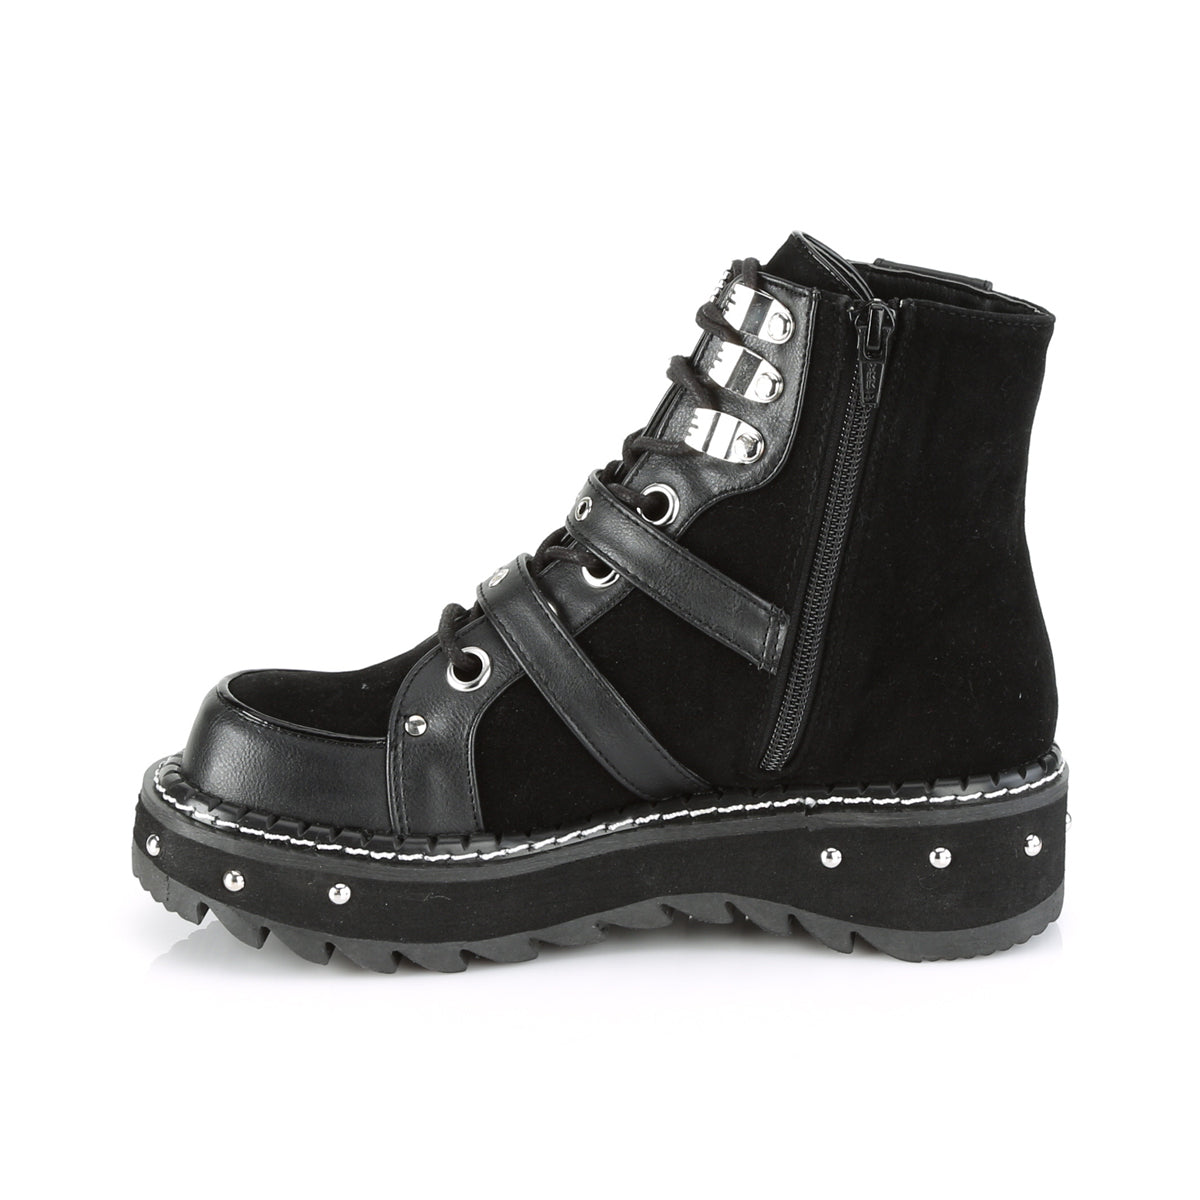 LILITH-278 Demonia Black Vegan Leather-Vegan Suede Women's Ankle Boots [Demonia Cult Alternative Footwear]